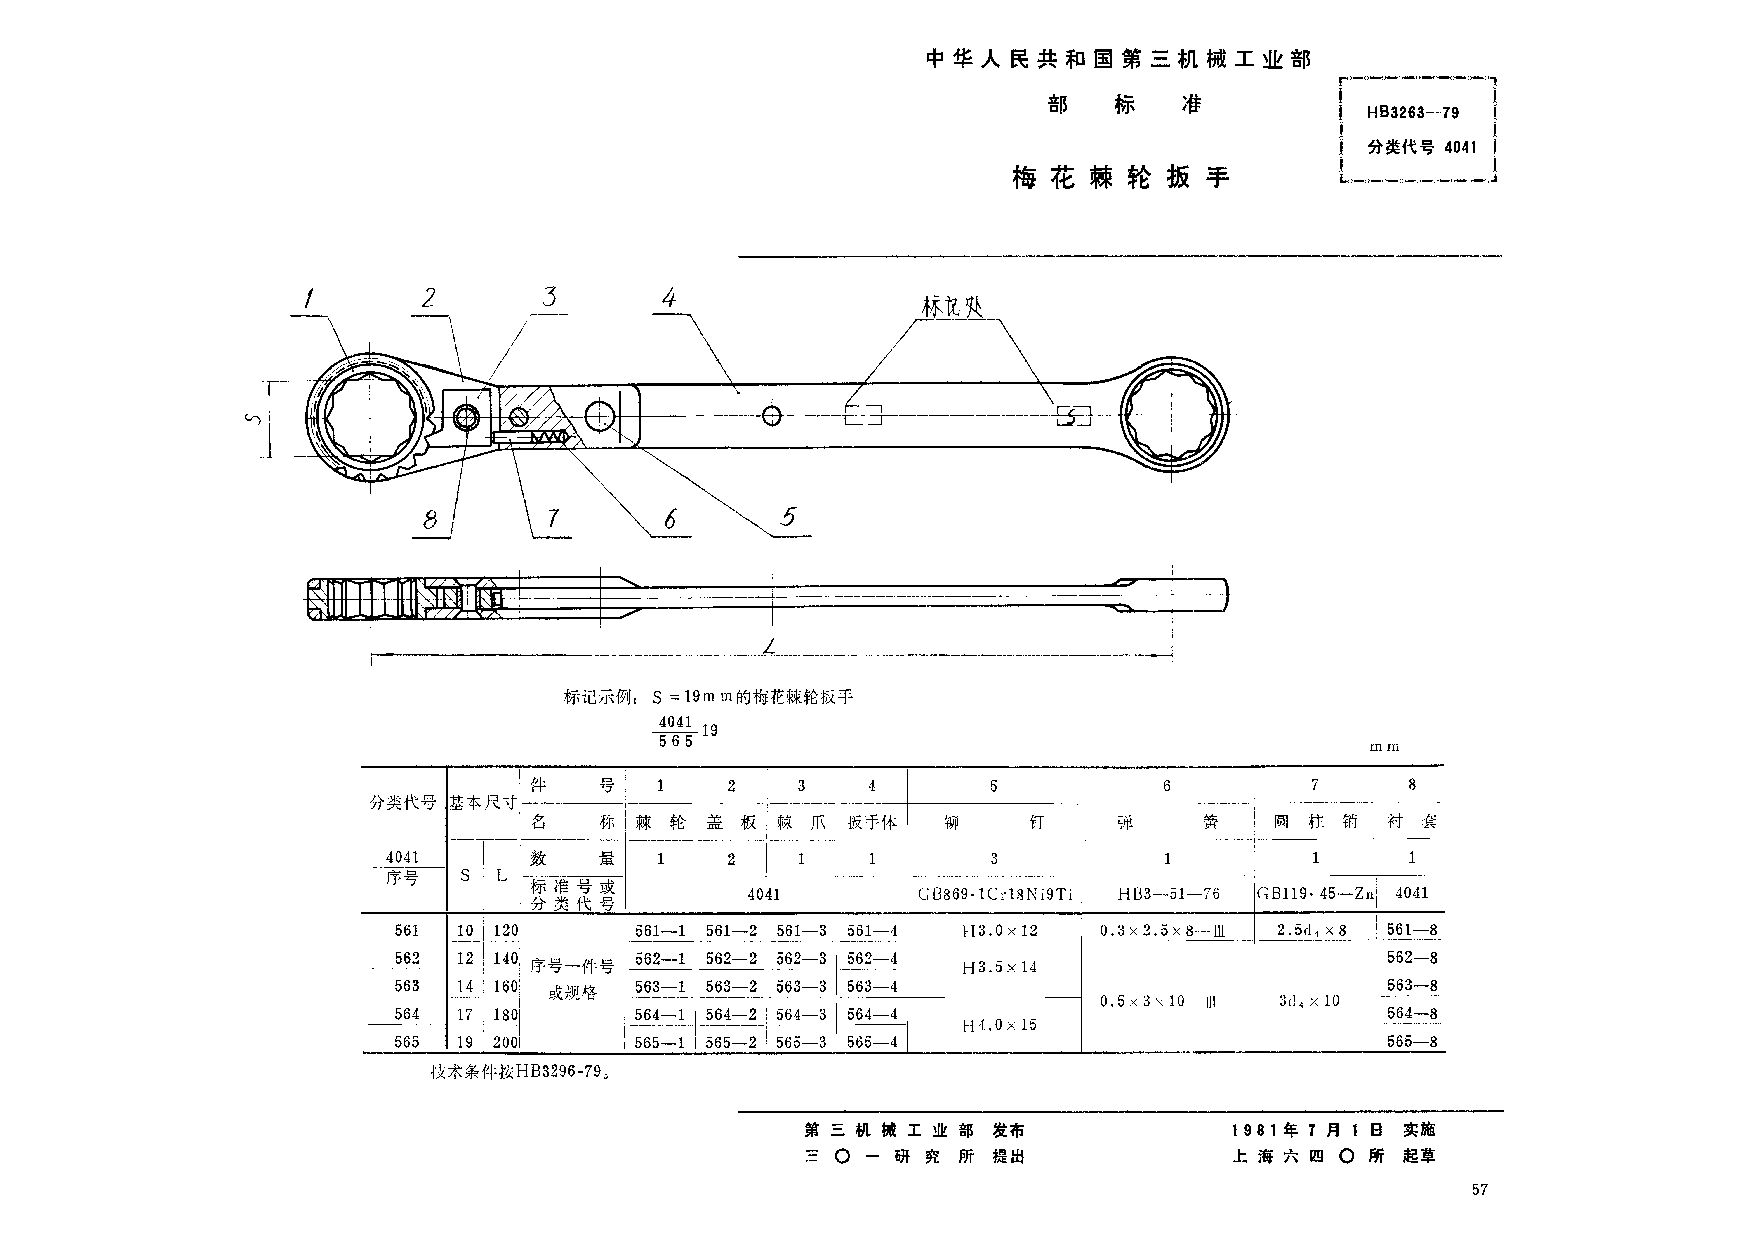 HB 3263-1979封面图